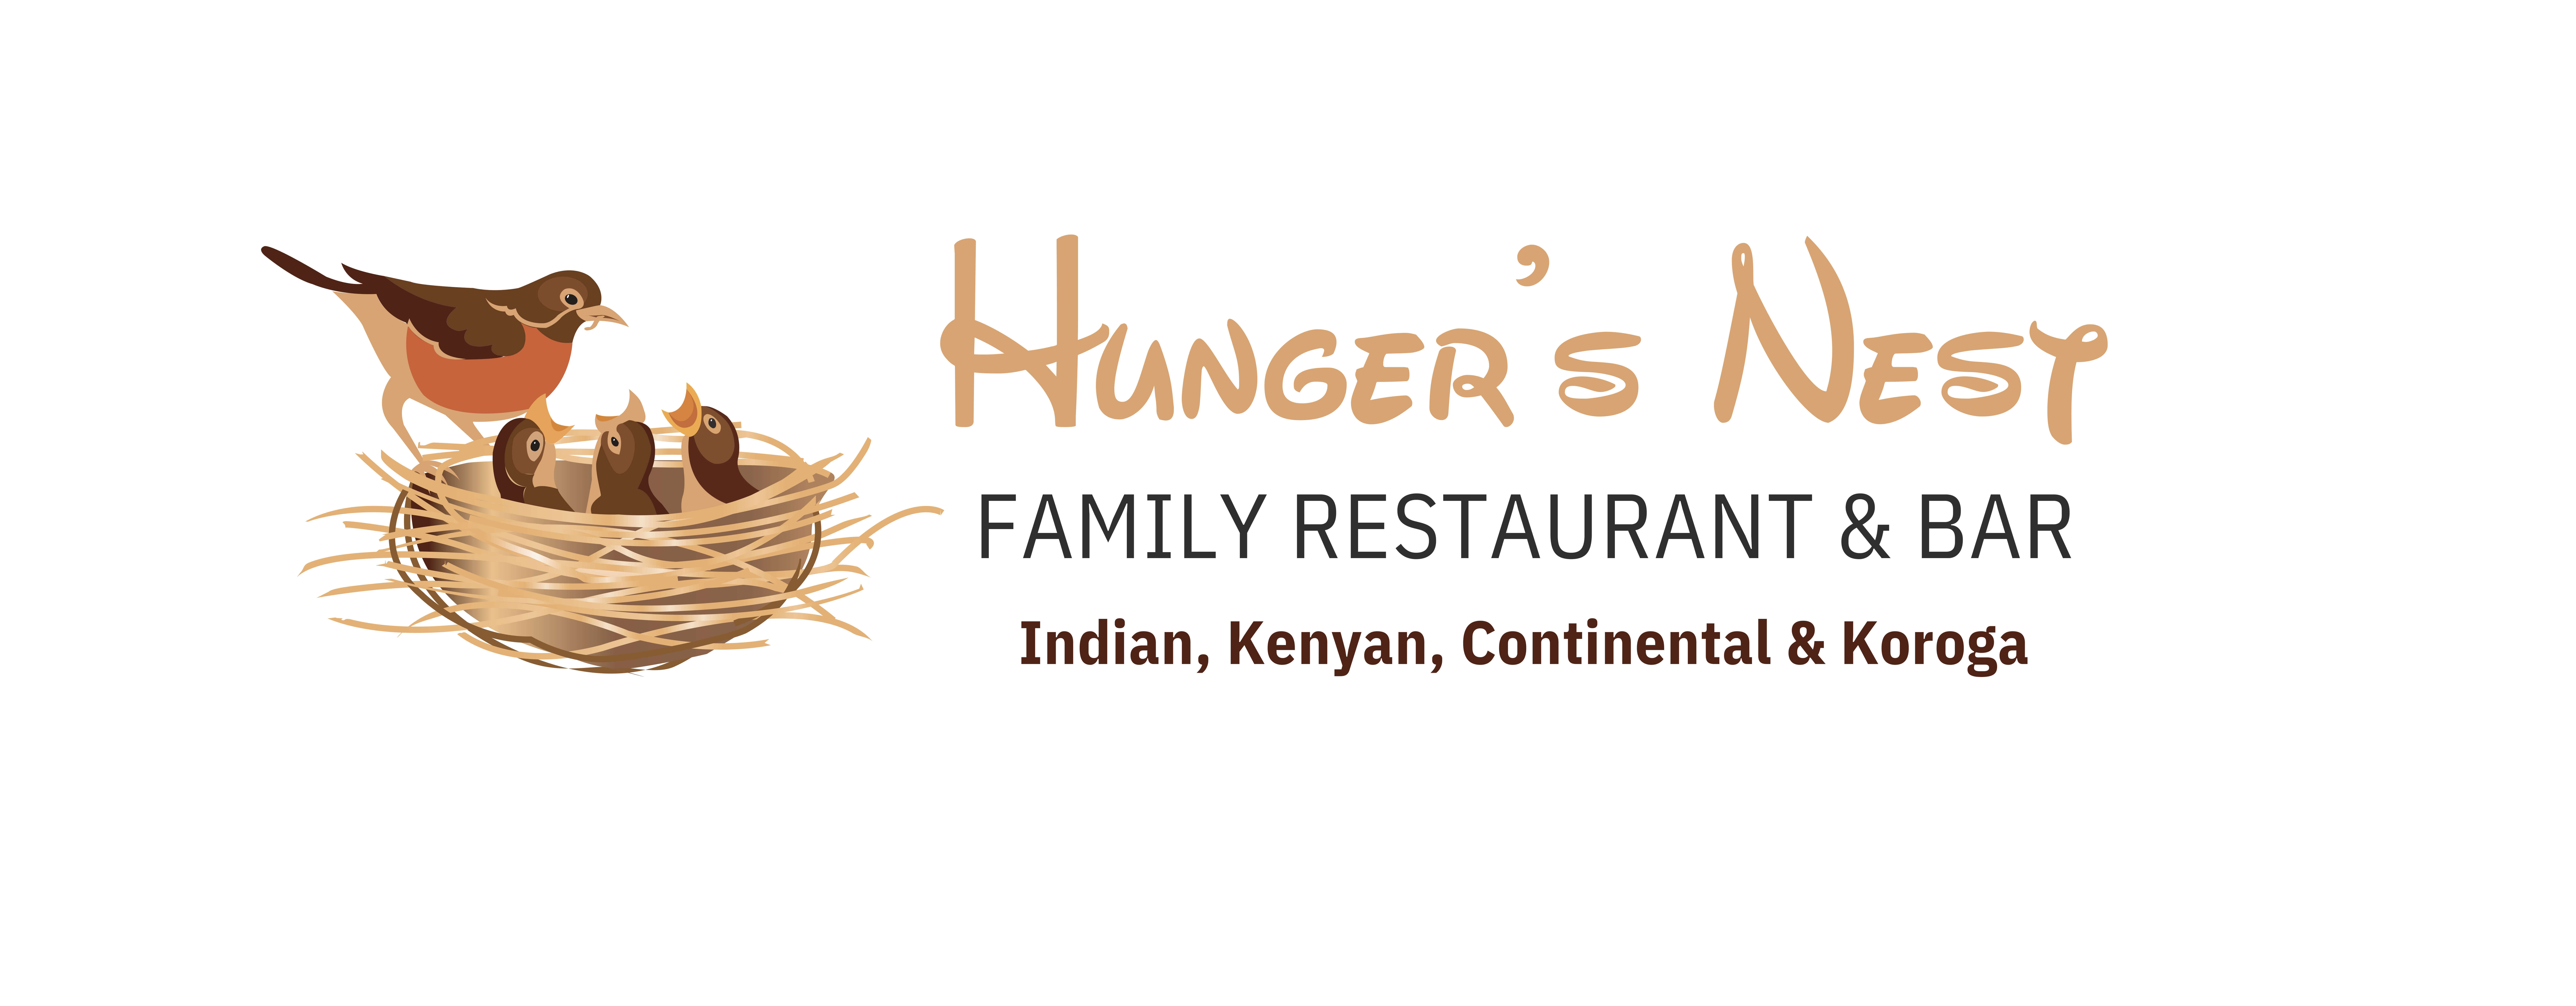 Hungers Nest logo High res.pdf (8000 Ã_ 3125 px) (1)_page-0001 (1)